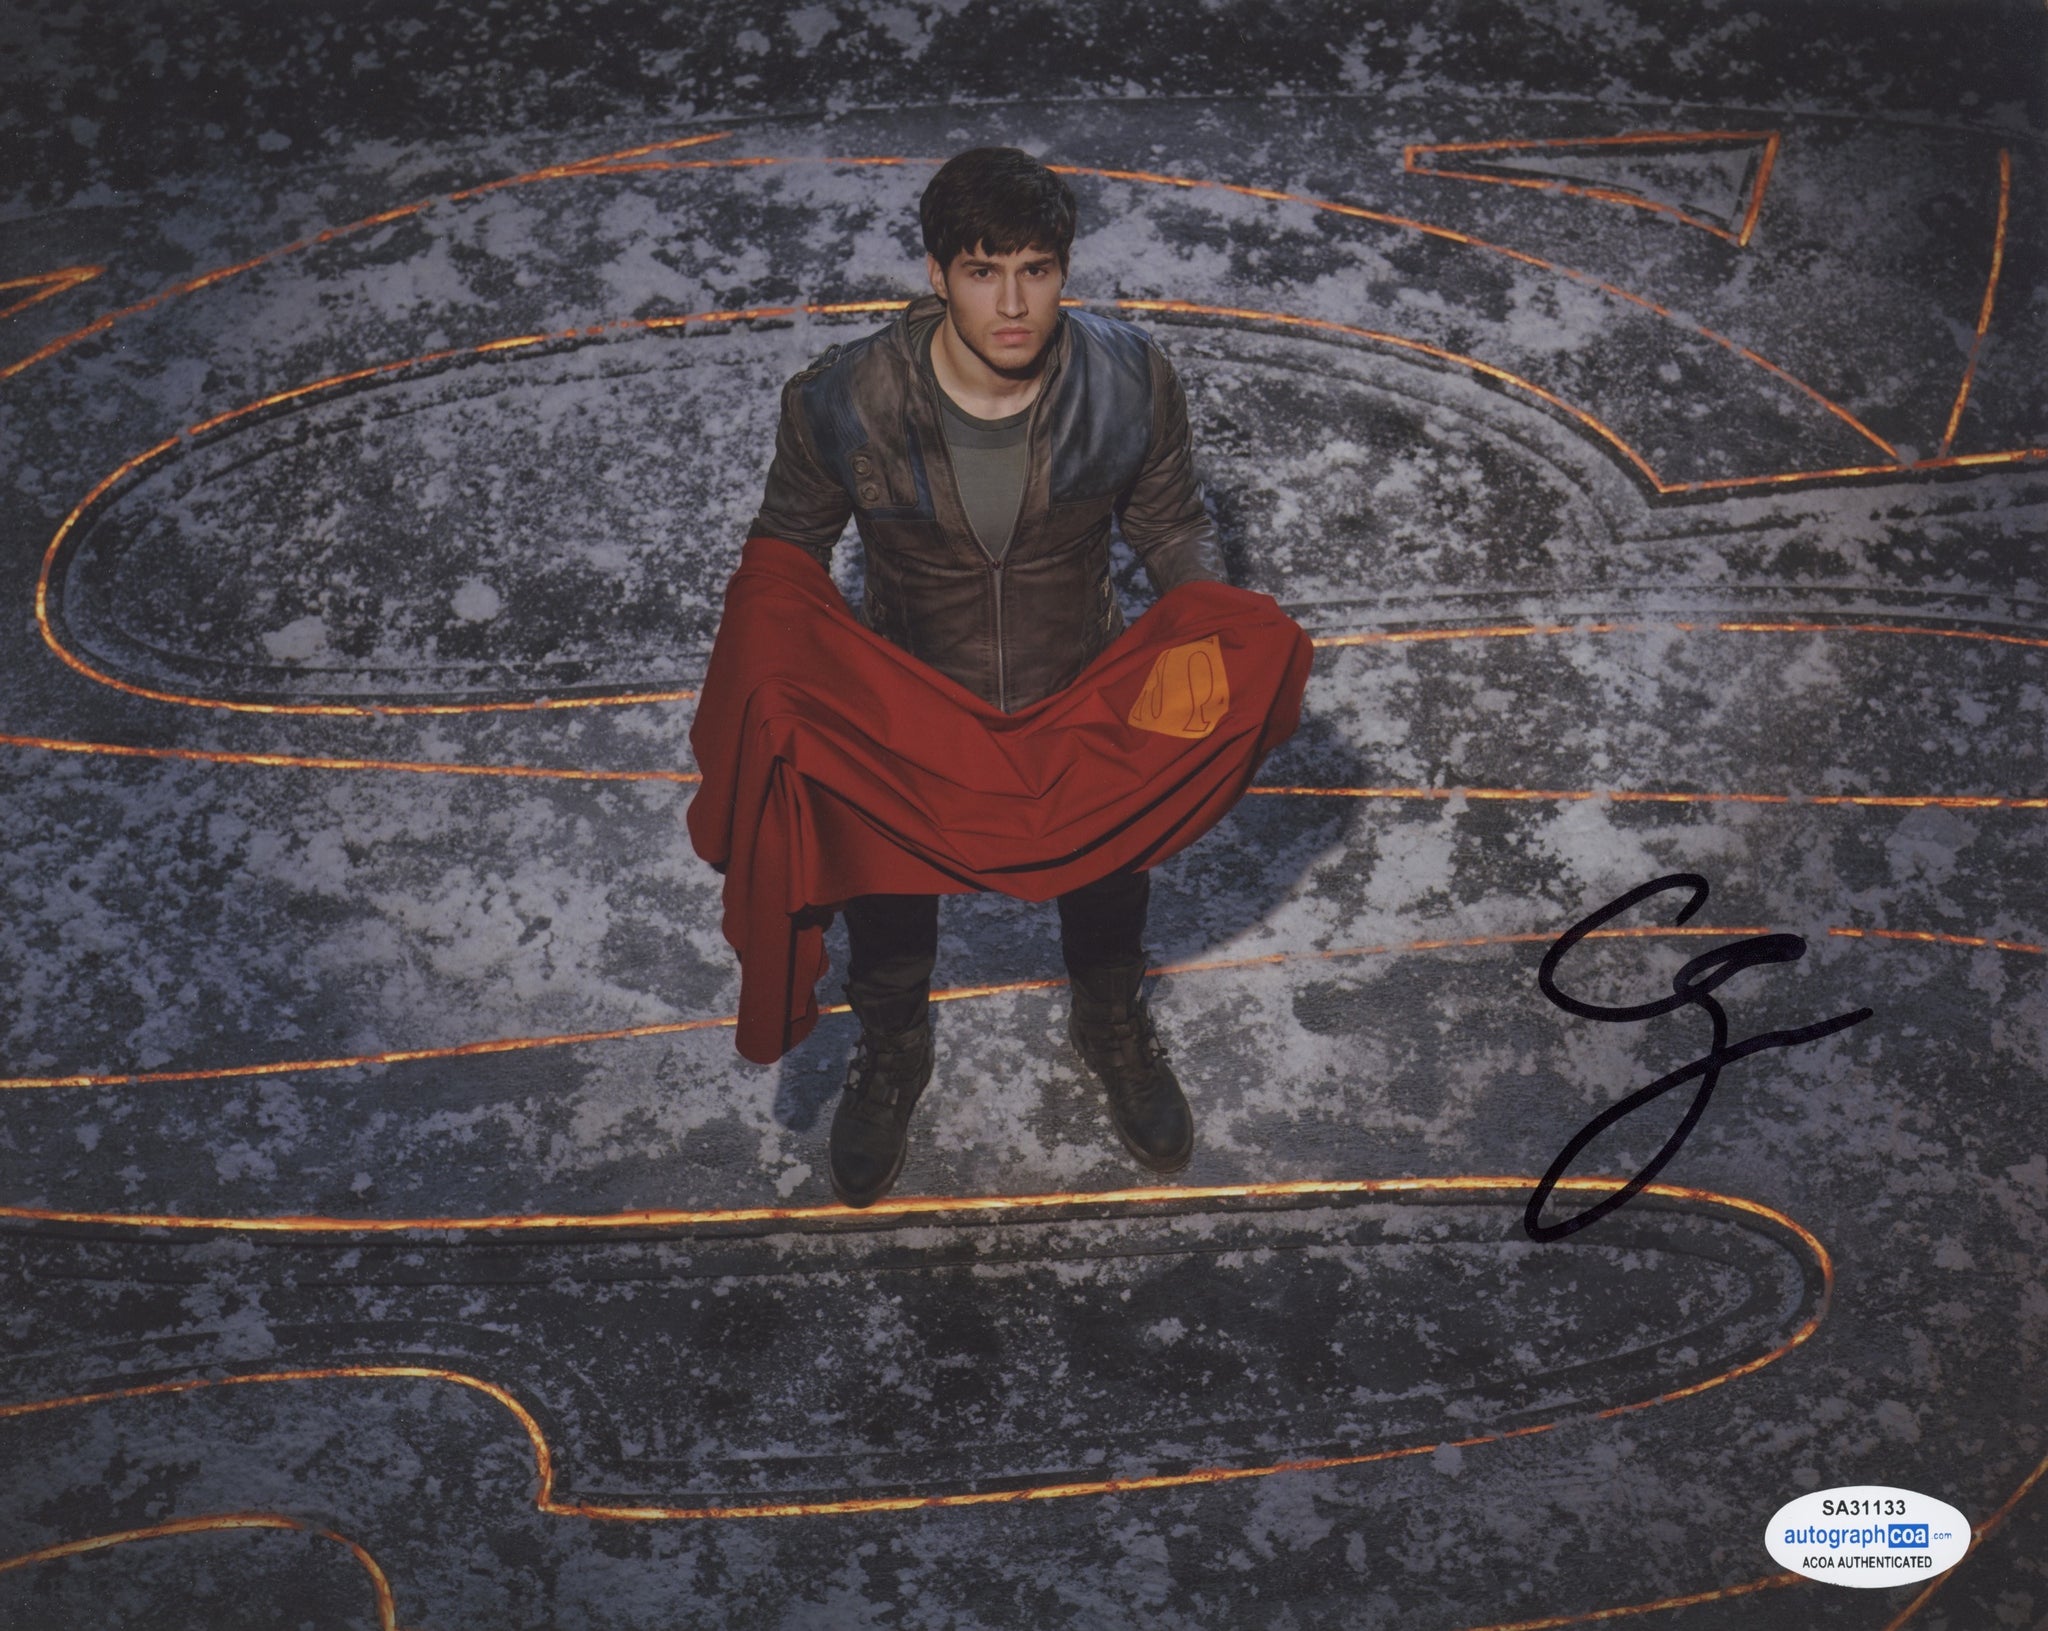 Cameron Cuffe Krypton Signed Autograph 8x10 Photo ACOA #4 - Outlaw Hobbies Authentic Autographs